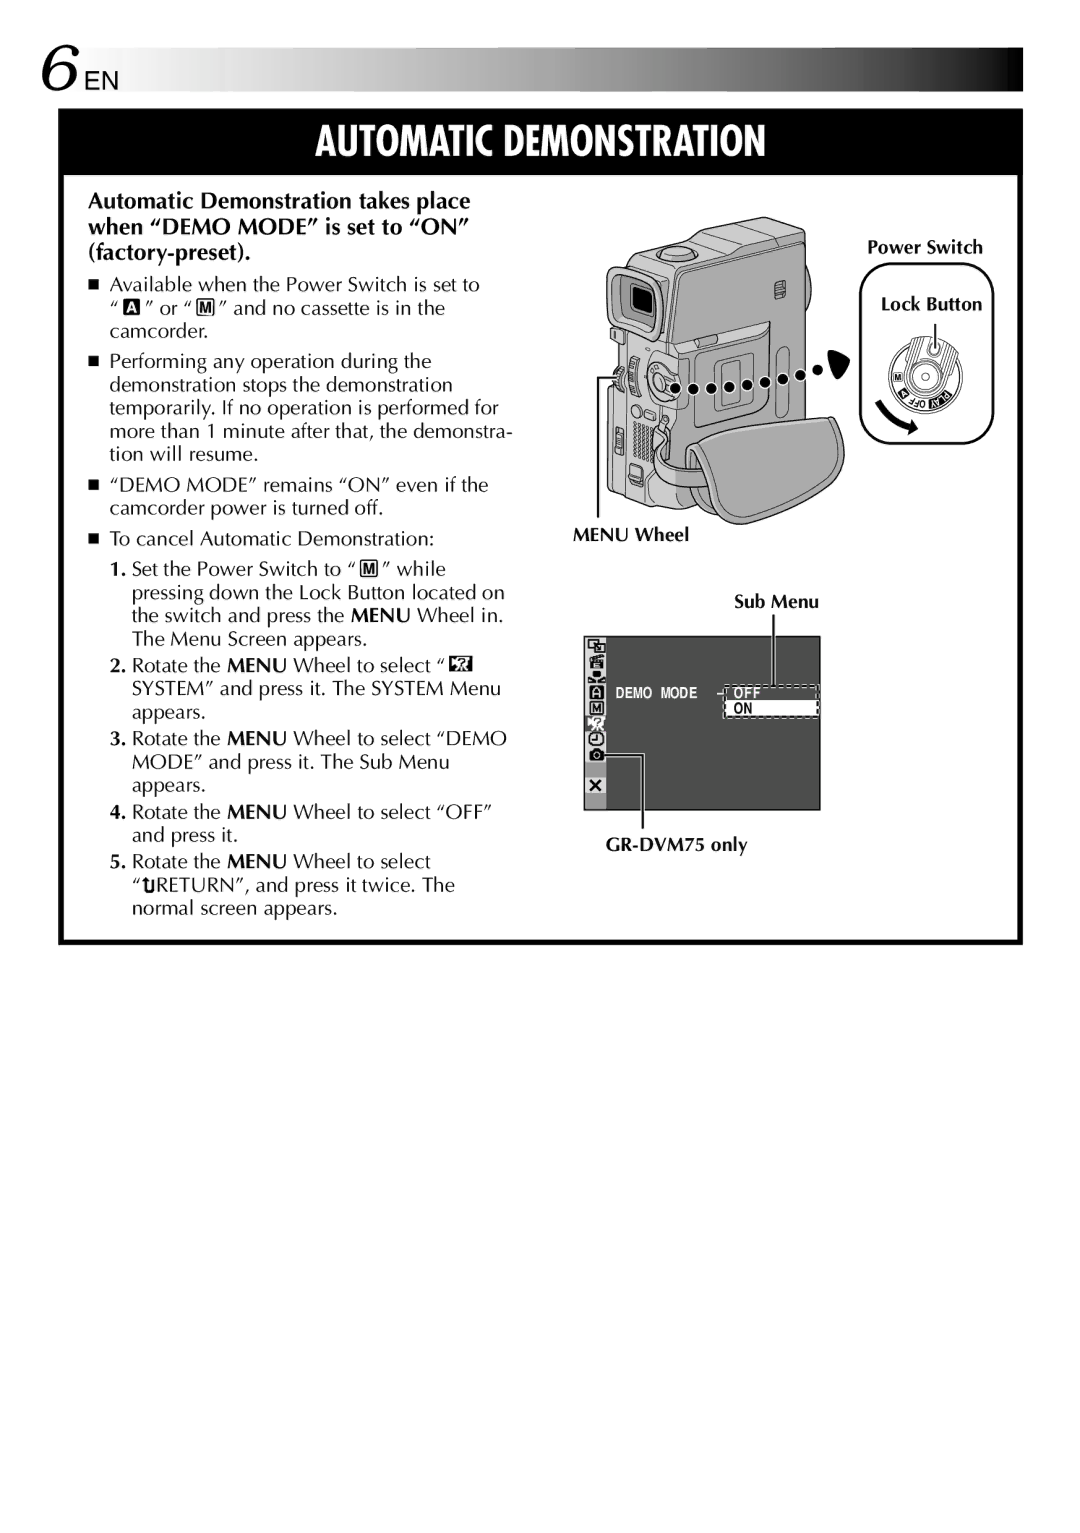 JVC specifications Menu Wheel Sub Menu, GR-DVM75 only Power Switch Lock Button 